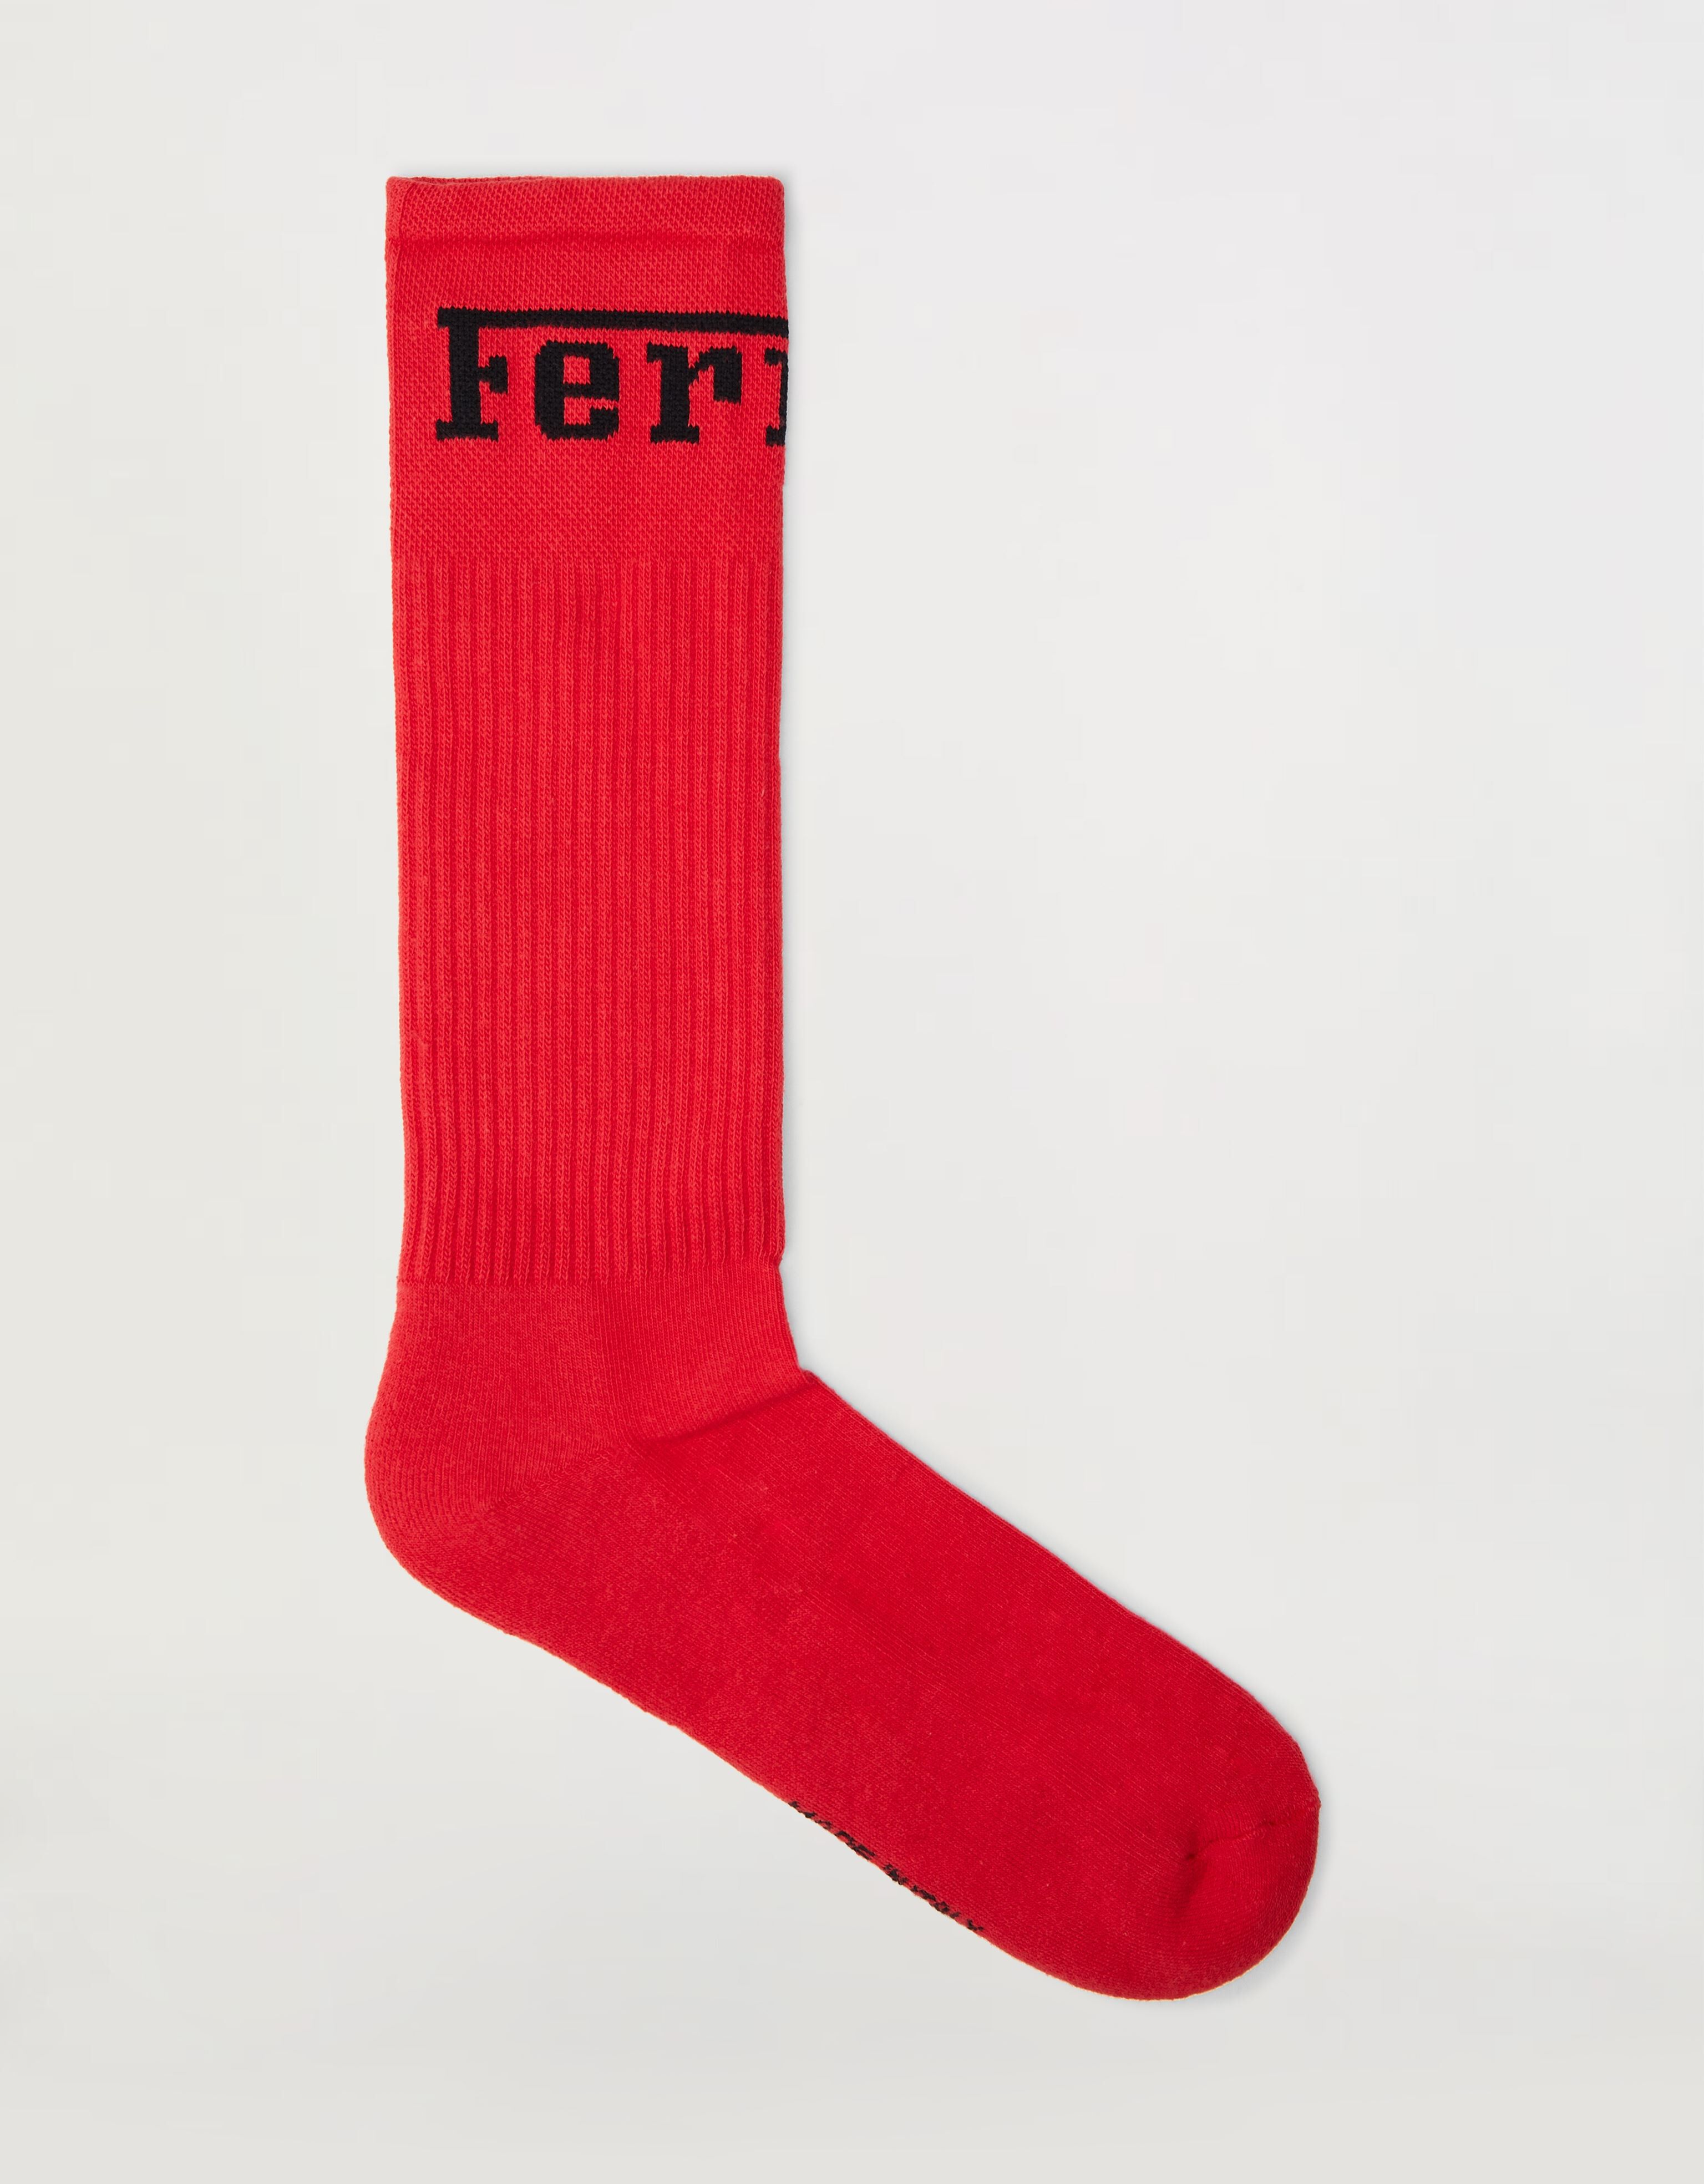 Ferrari Cotton blend socks with Ferrari logo Red 20007f